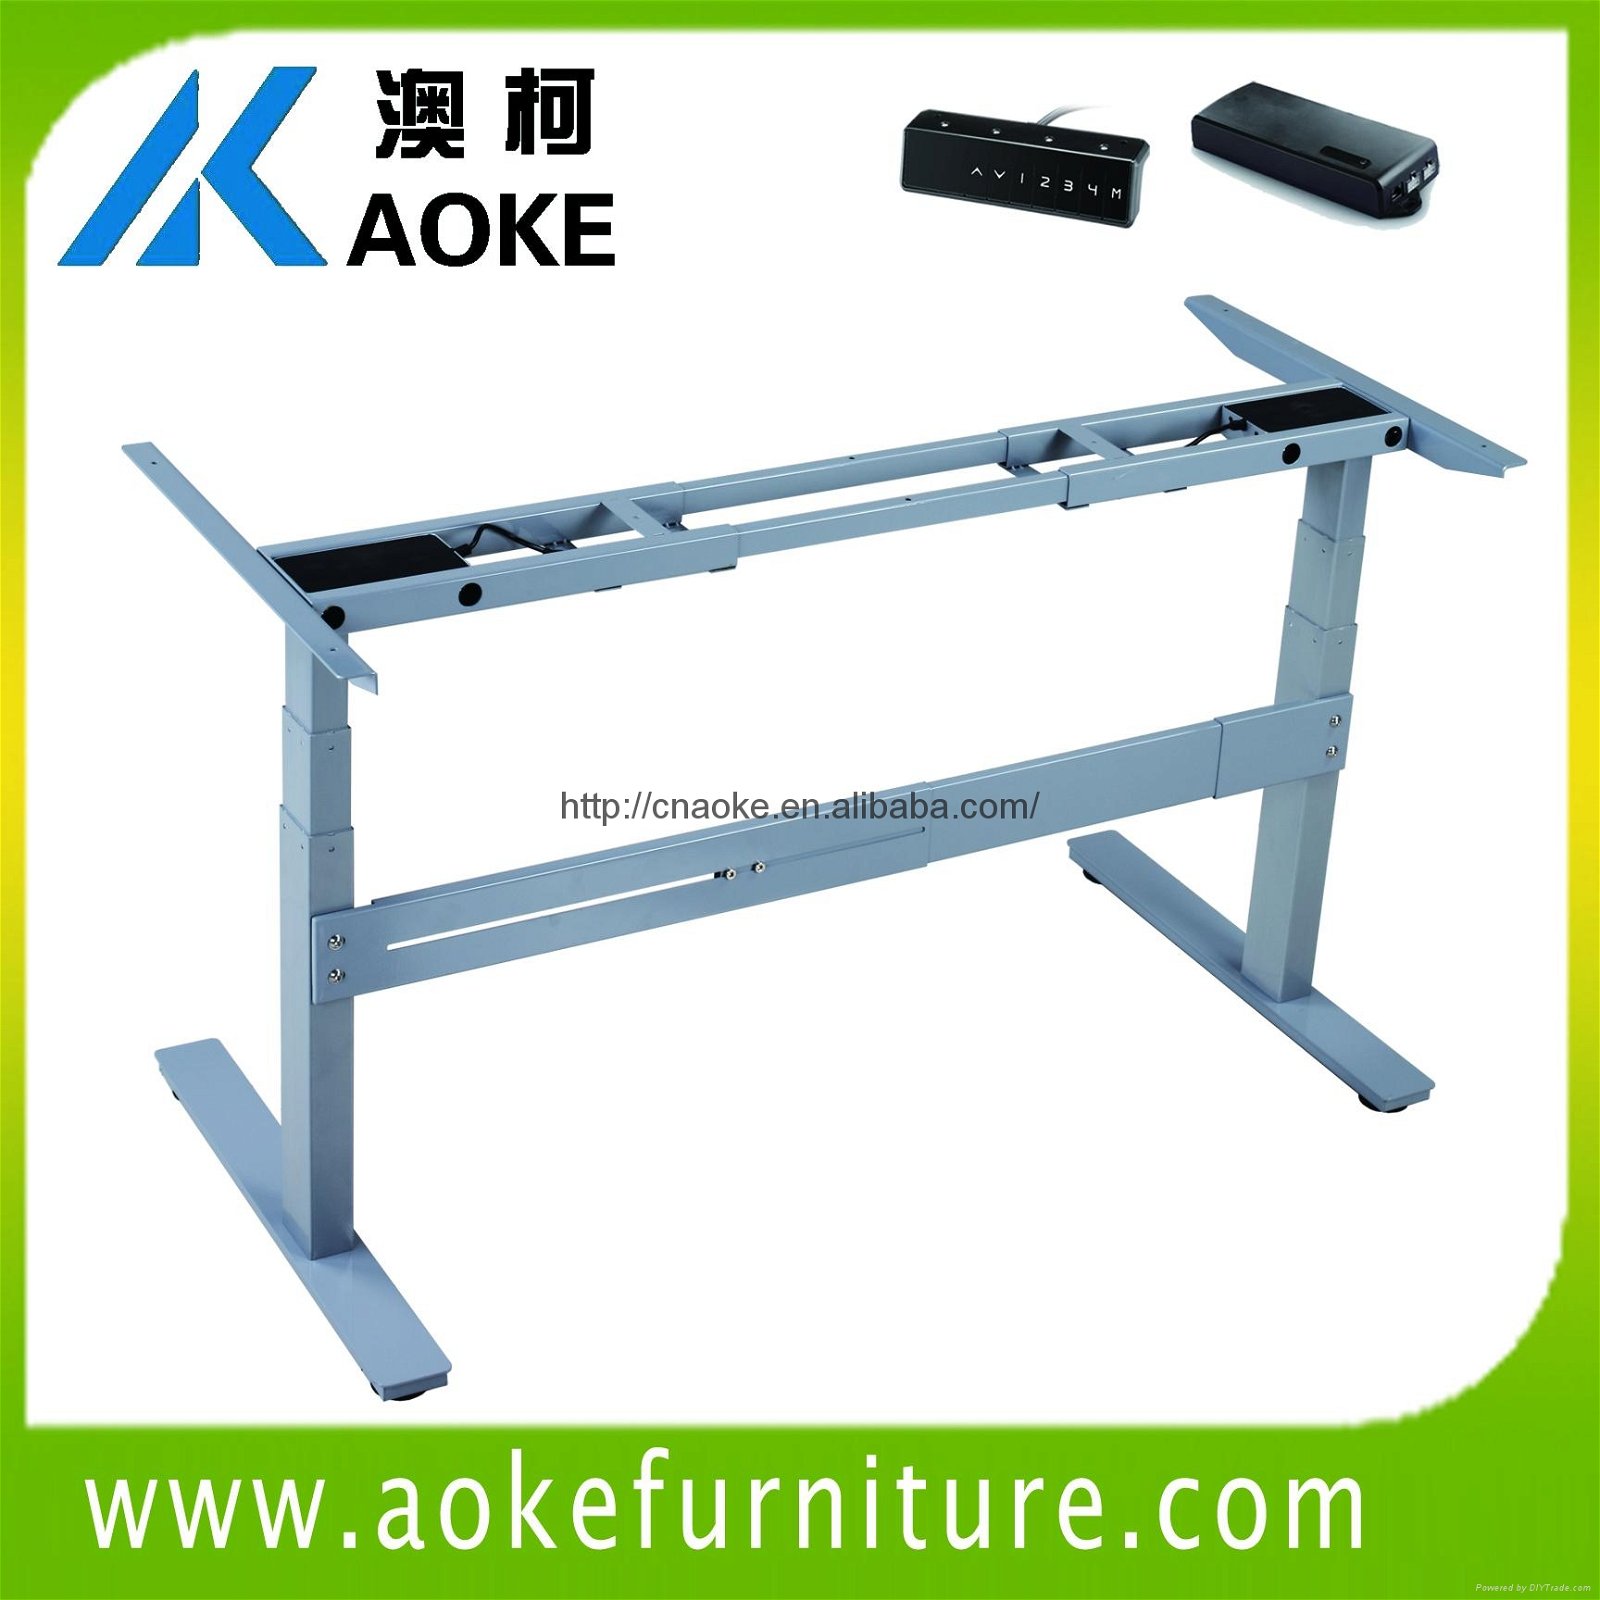 AOKE AK2RT-ZB3 electric height adjustable desk